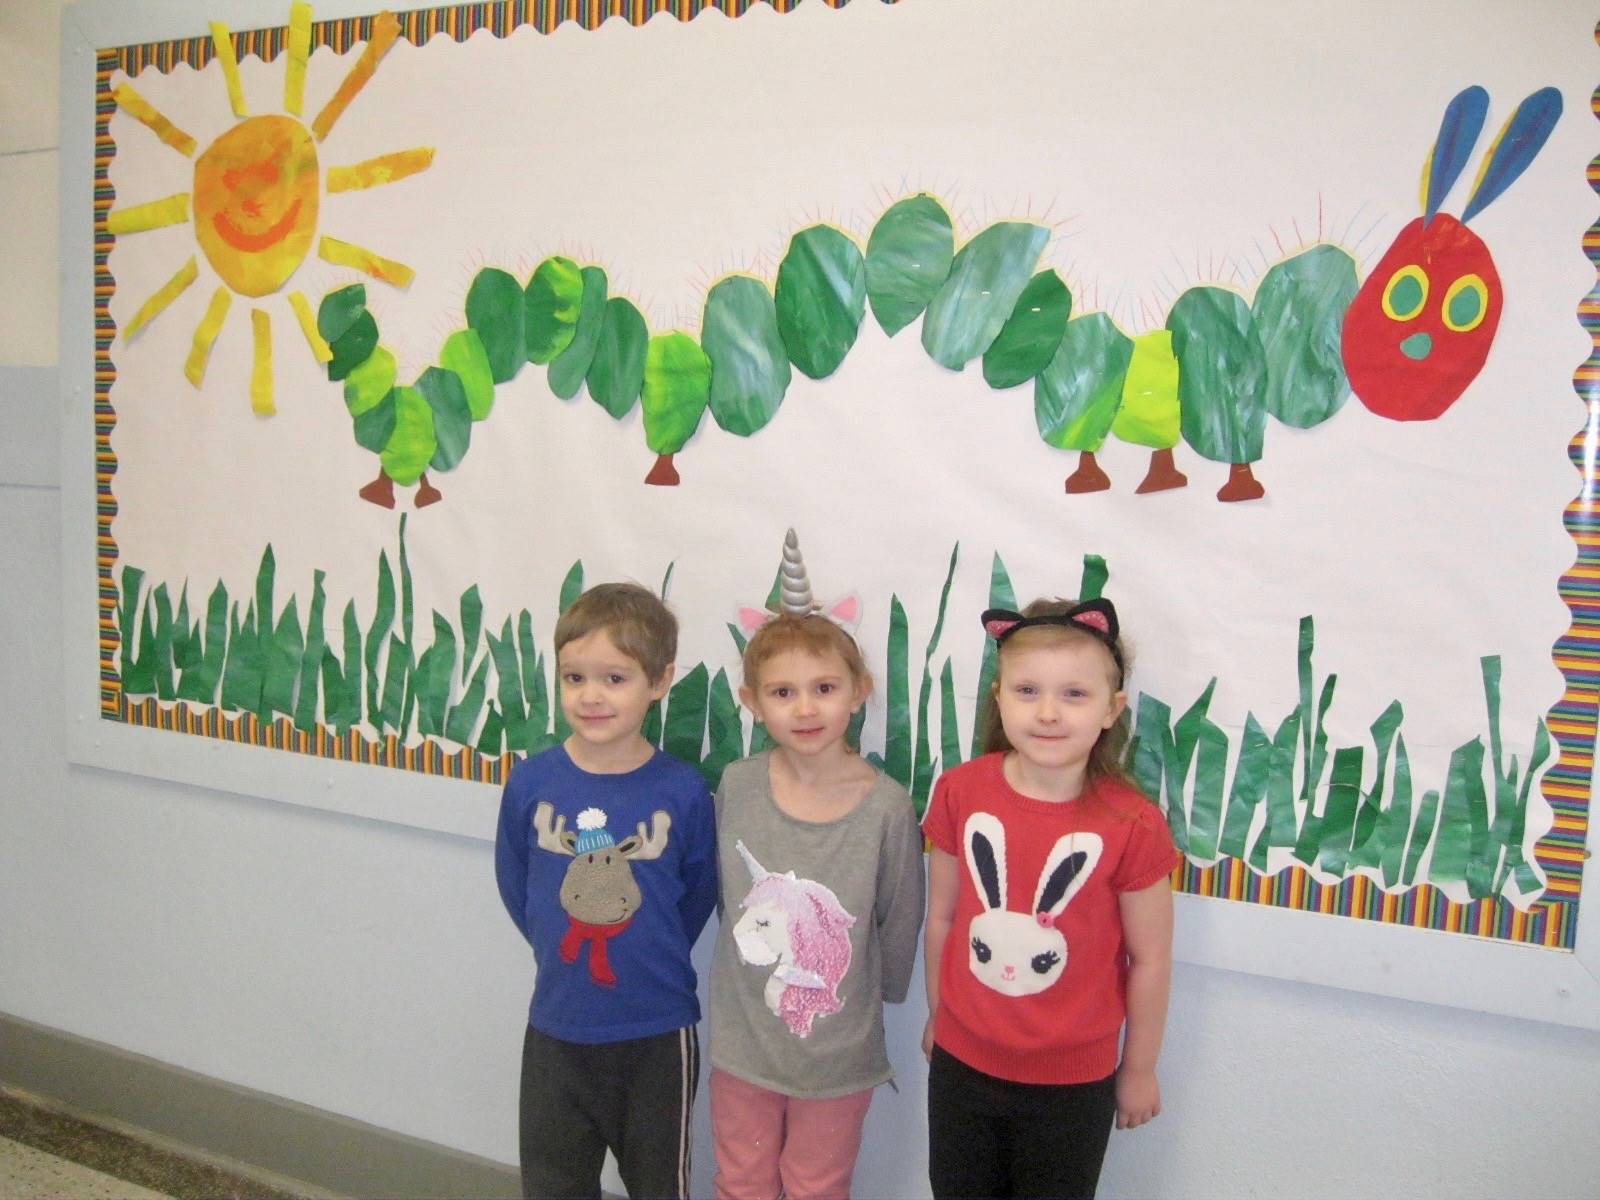 3 students dressed like their favorite animal.